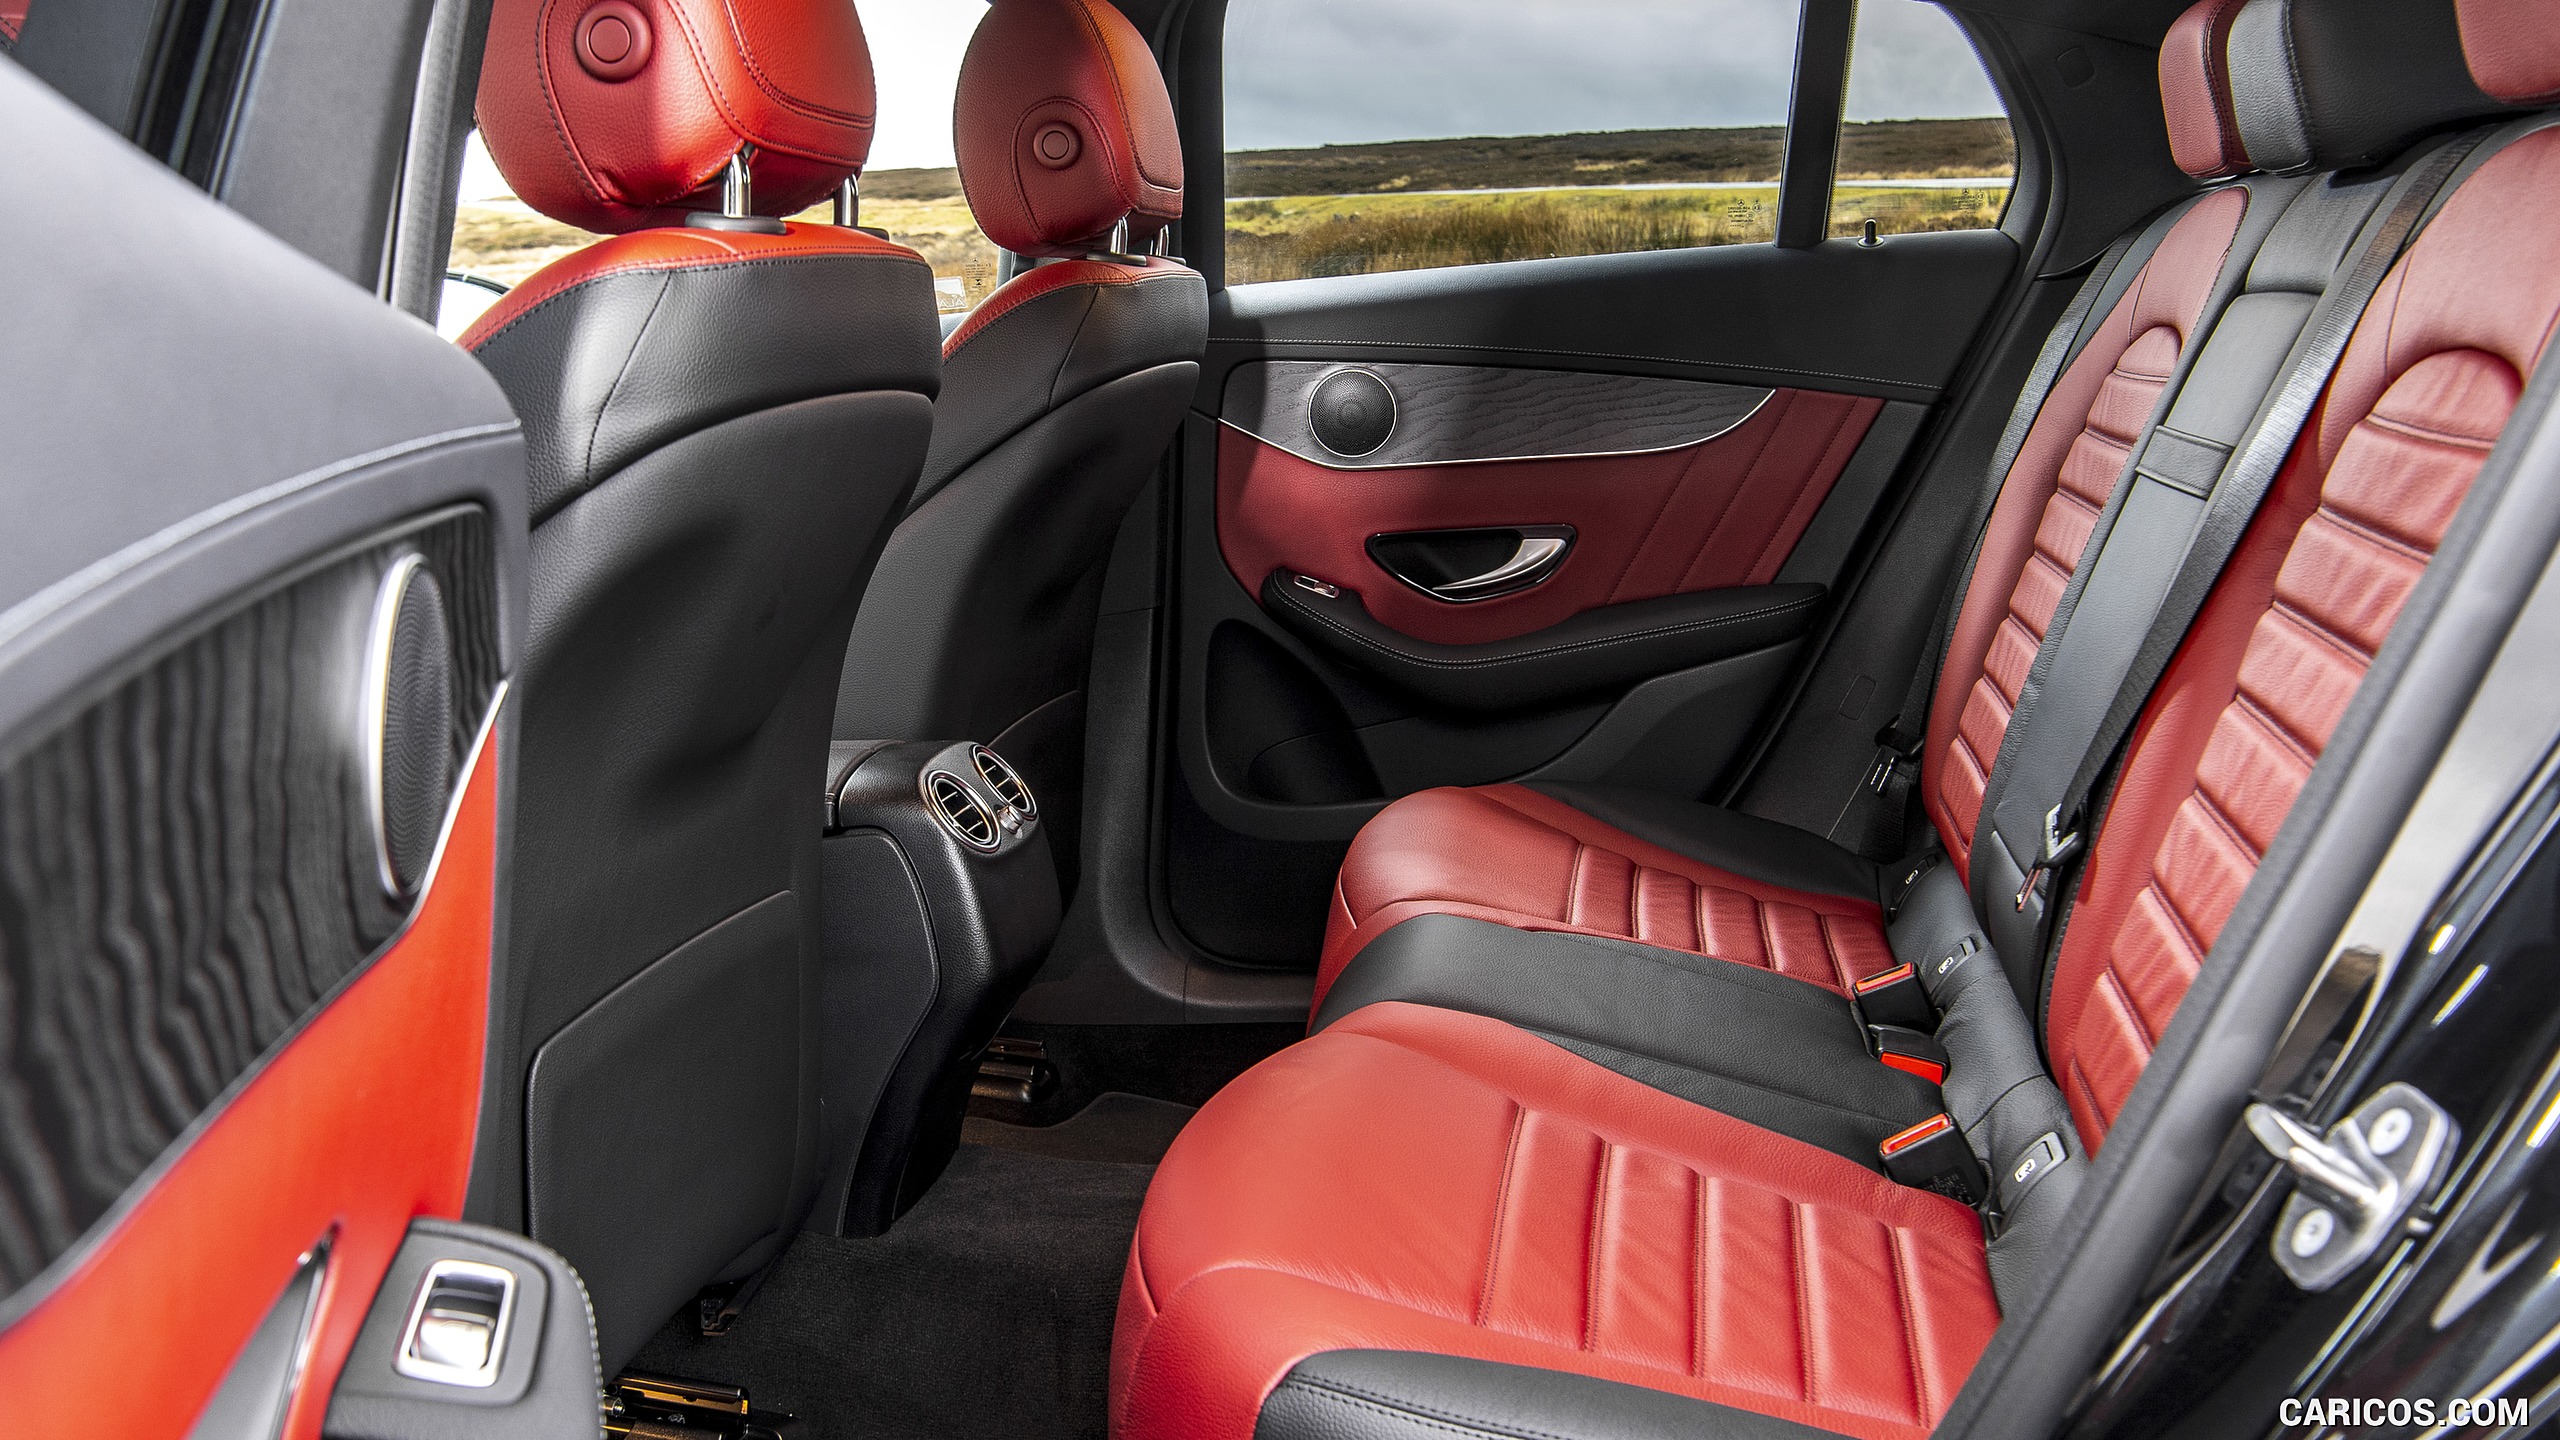 2020 Mercedes-Benz GLC Coupe (UK-Spec) - Interior, Rear Seats, #162 of 165